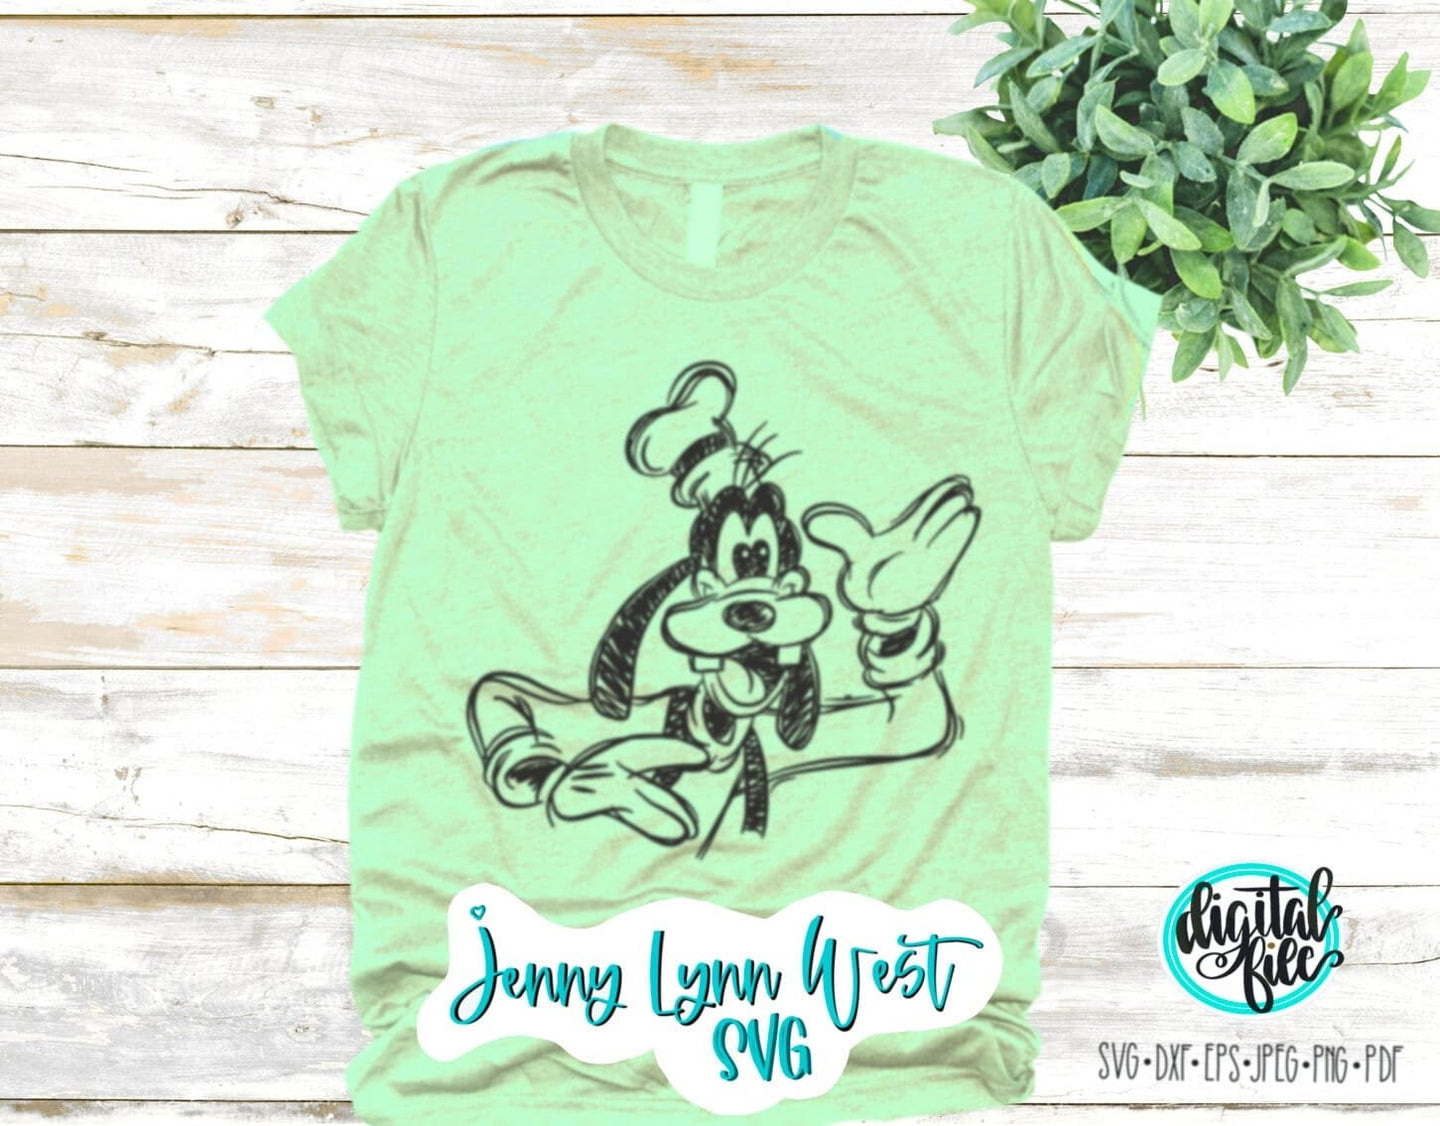 Goofy Sketch SVG  Goofy Classic Sketched Disneyland Print Iron on DisneySVG Shirt Cricut Cut File svg PNG dxf Vintage Goofy Sketch